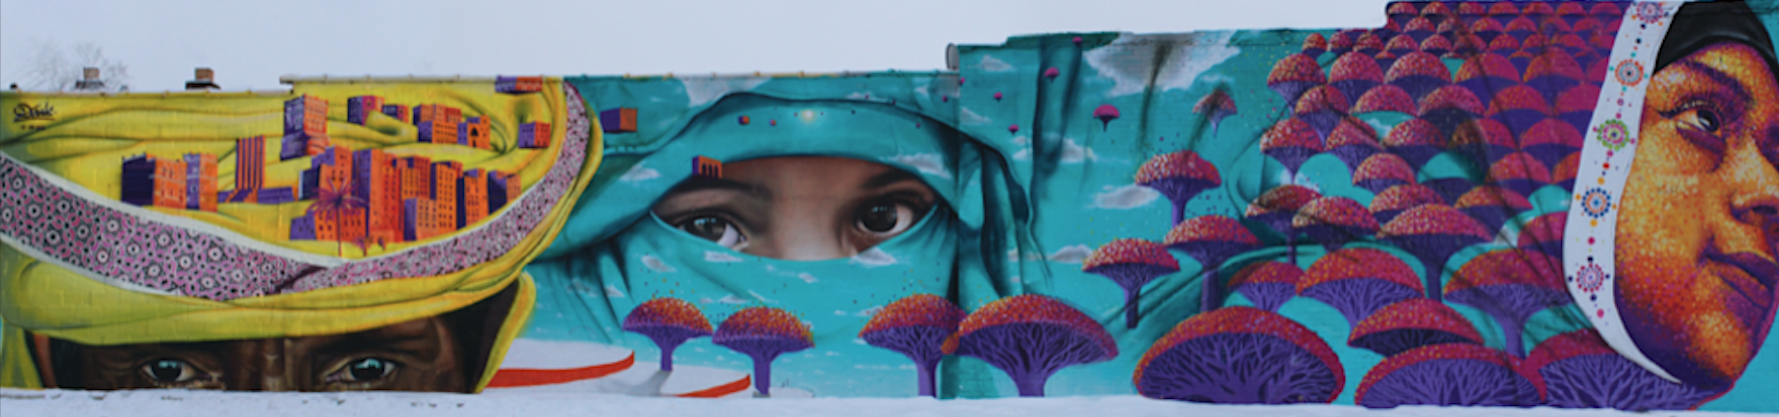 Yemeni Mural, Hamtrack, MI